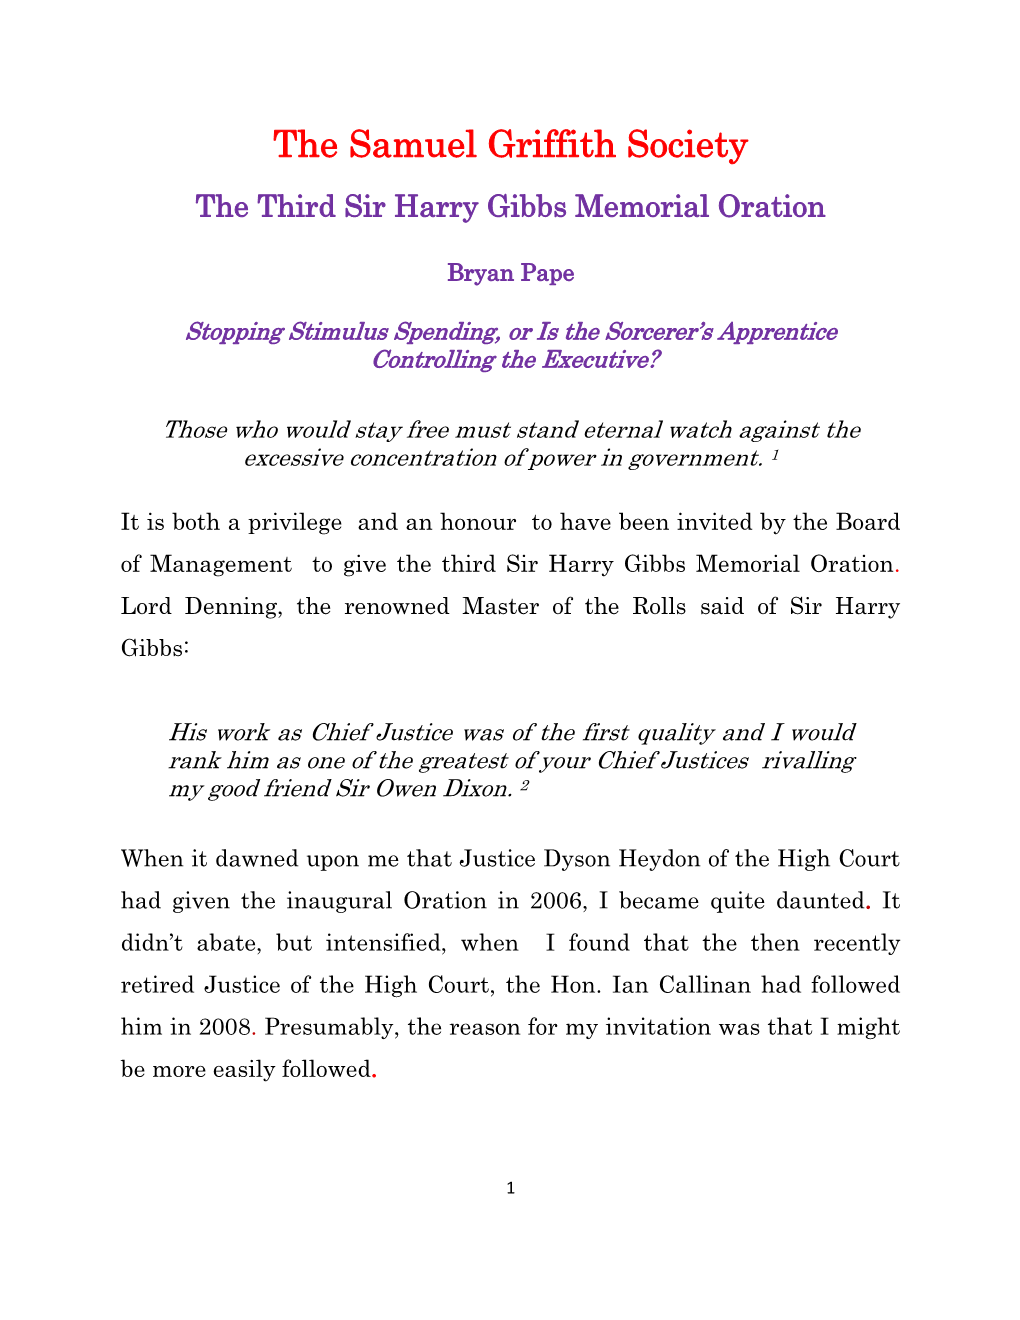 The Sir Harry Gibbs Memorial Oration